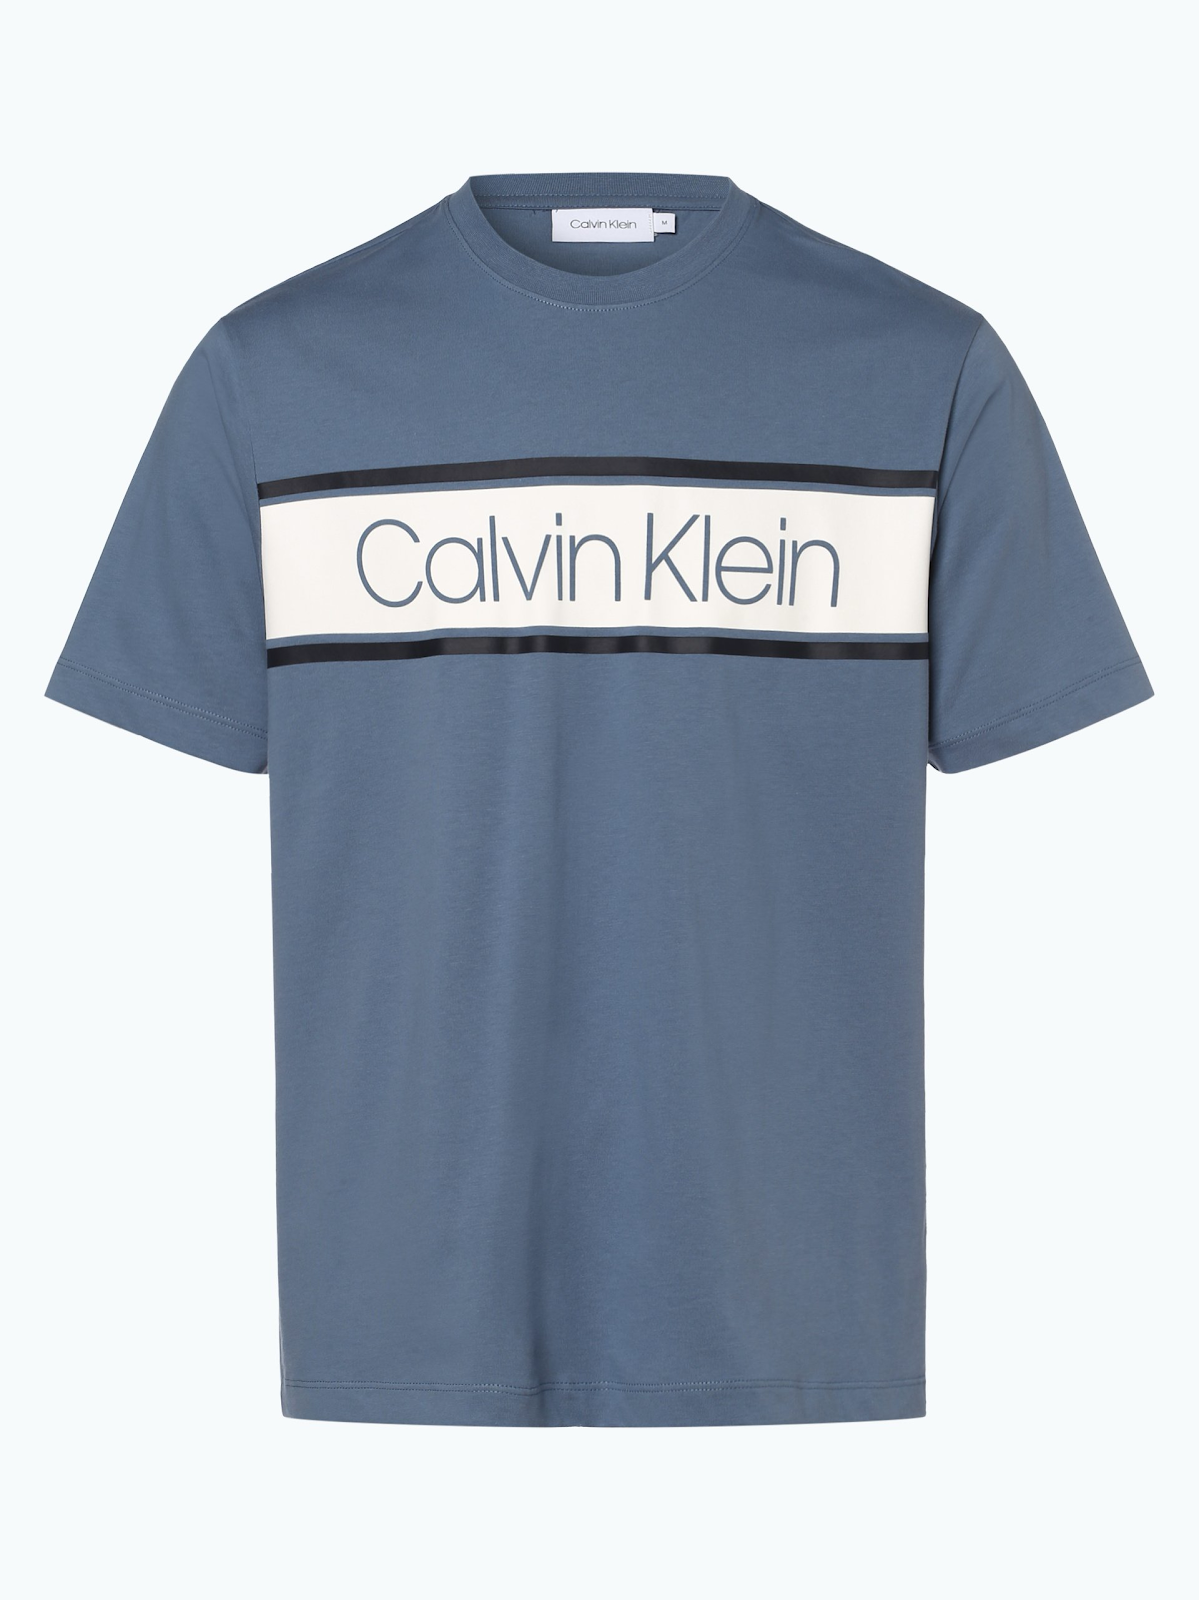 Prosty T-shirt Calvin Klein